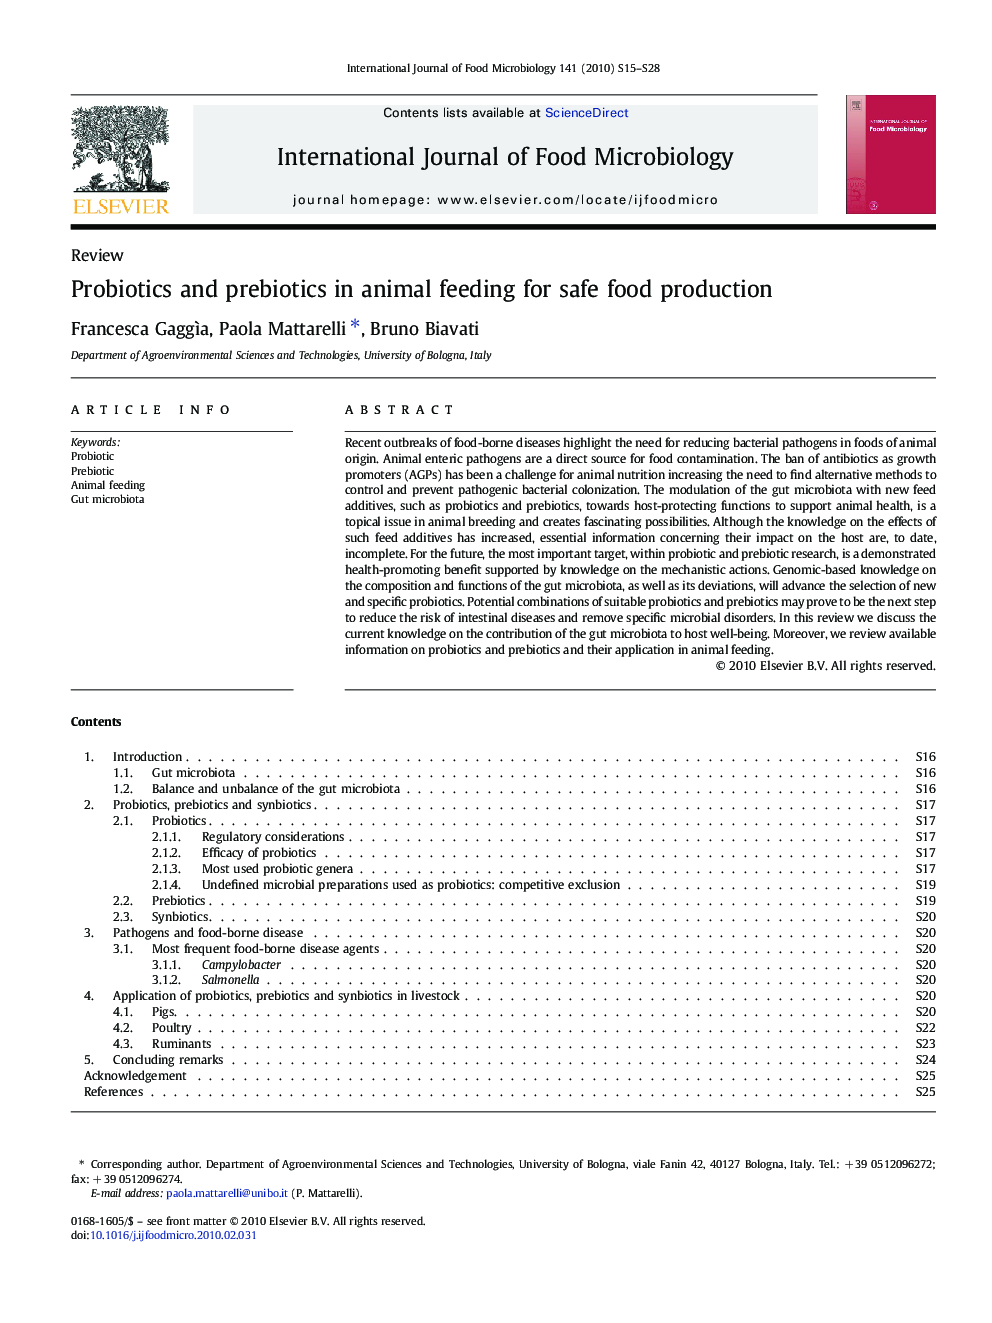 Probiotics and prebiotics in animal feeding for safe food production